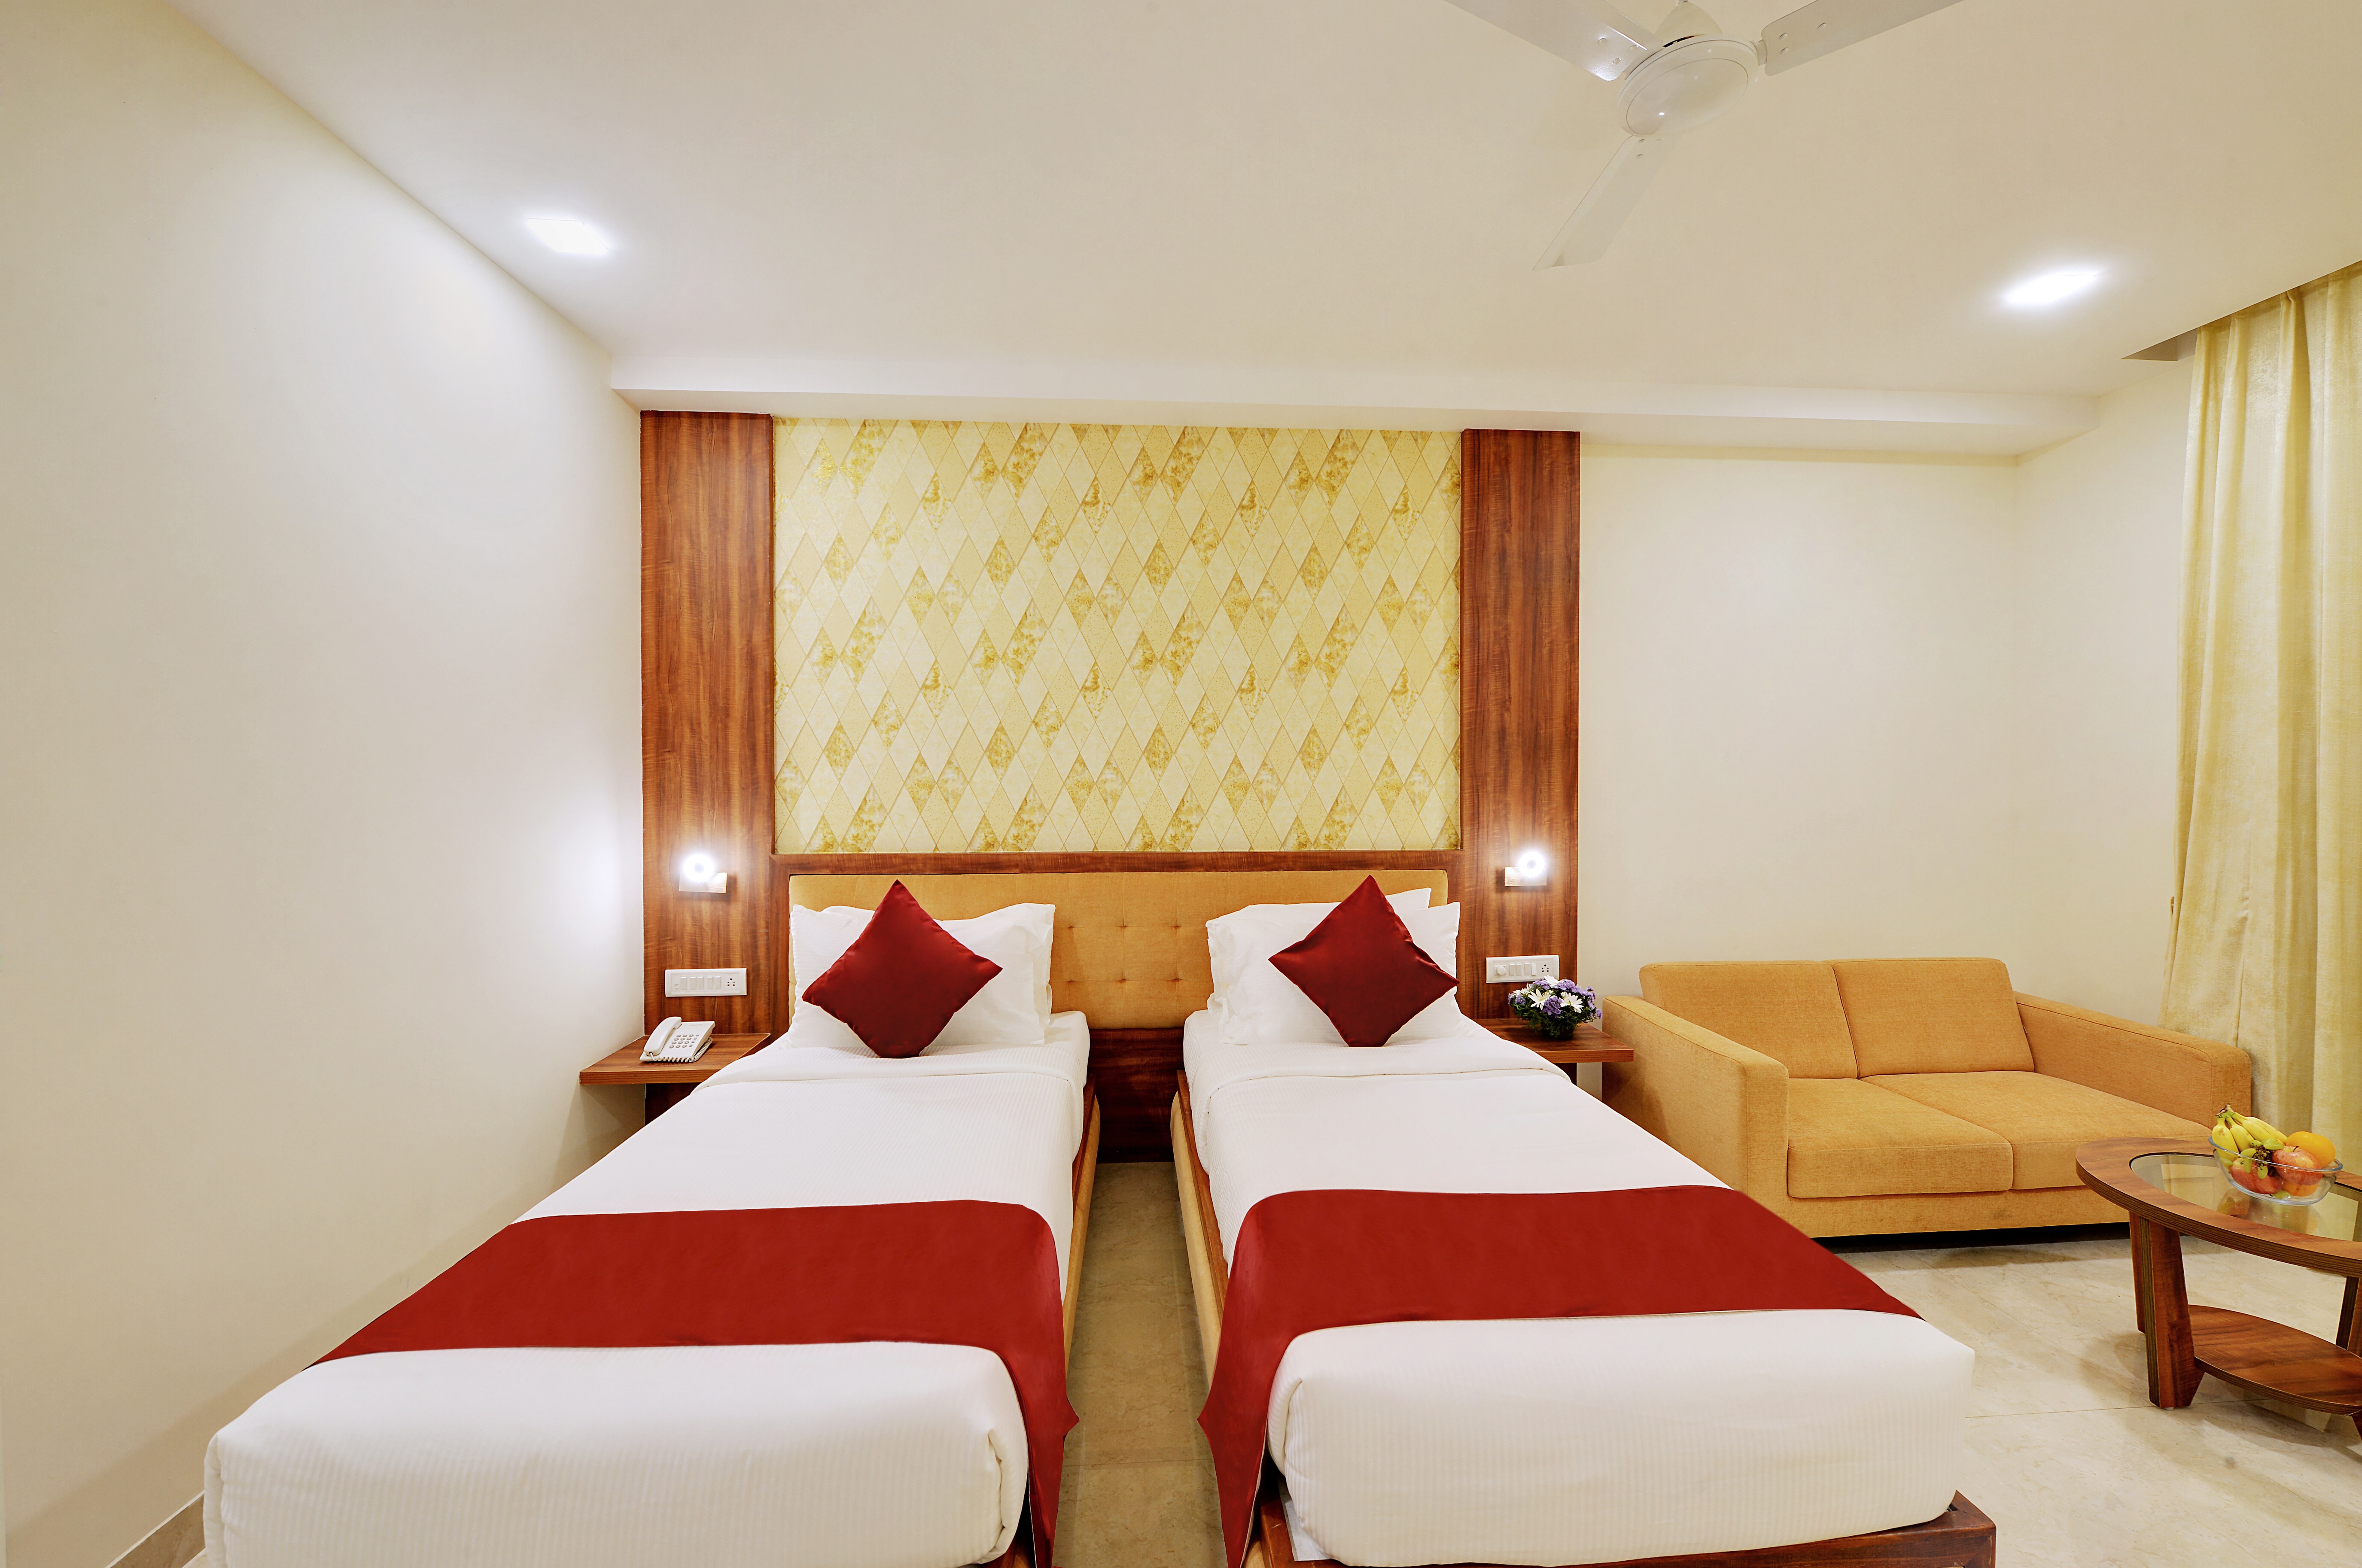 Standard Rooms at La Sara Gateway
Hotel 8